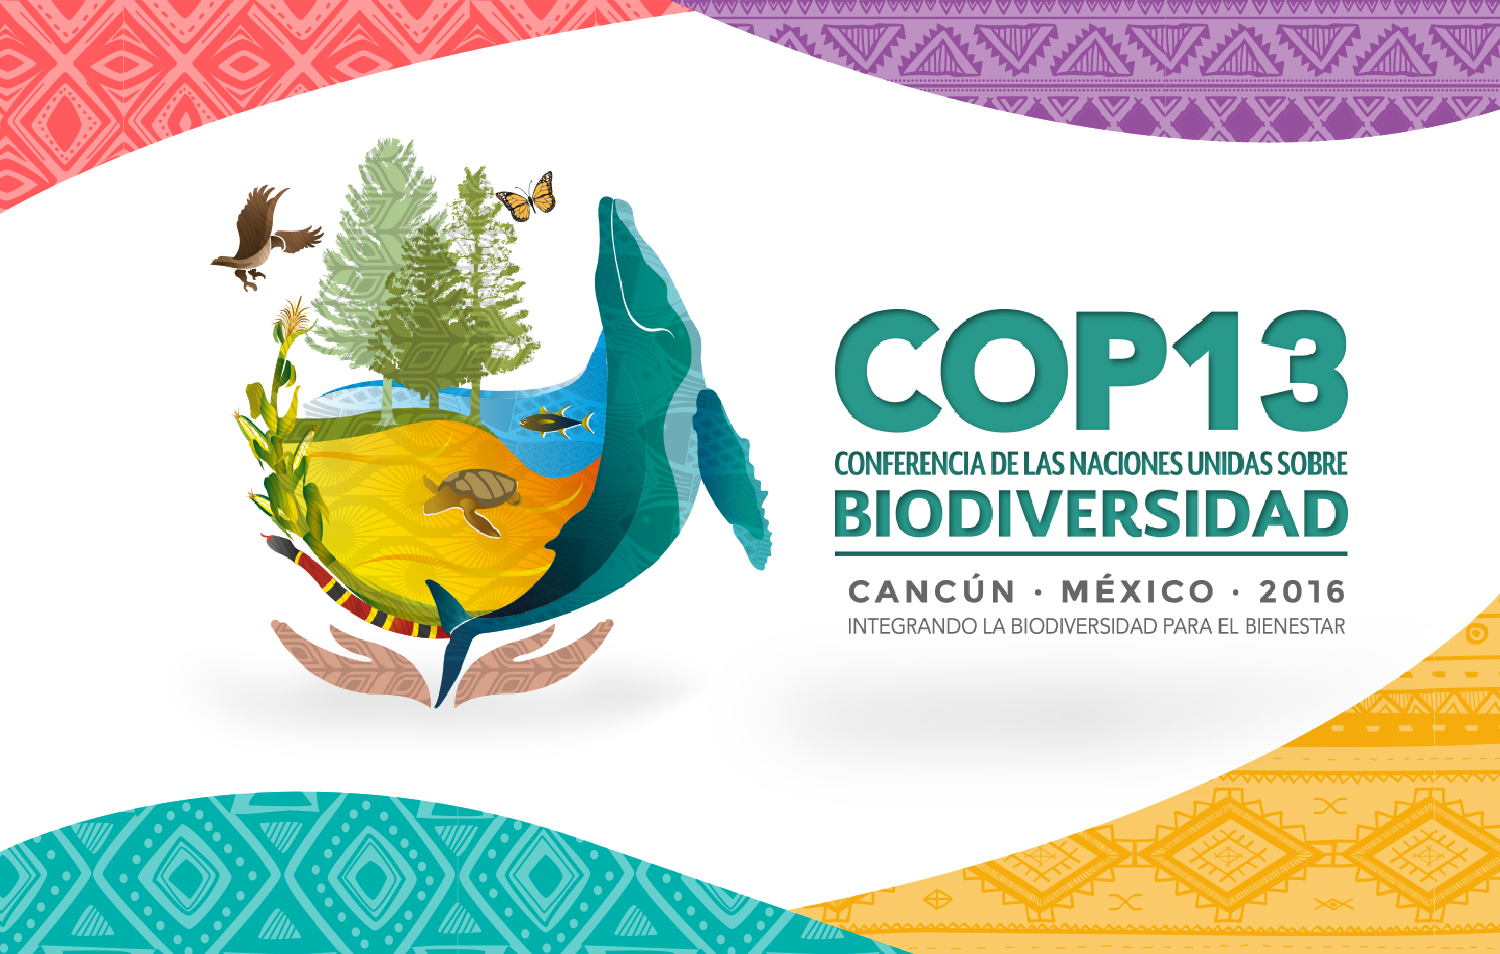 La COP13 se llevará a cabo en Cancún, Quintana Roo, México.